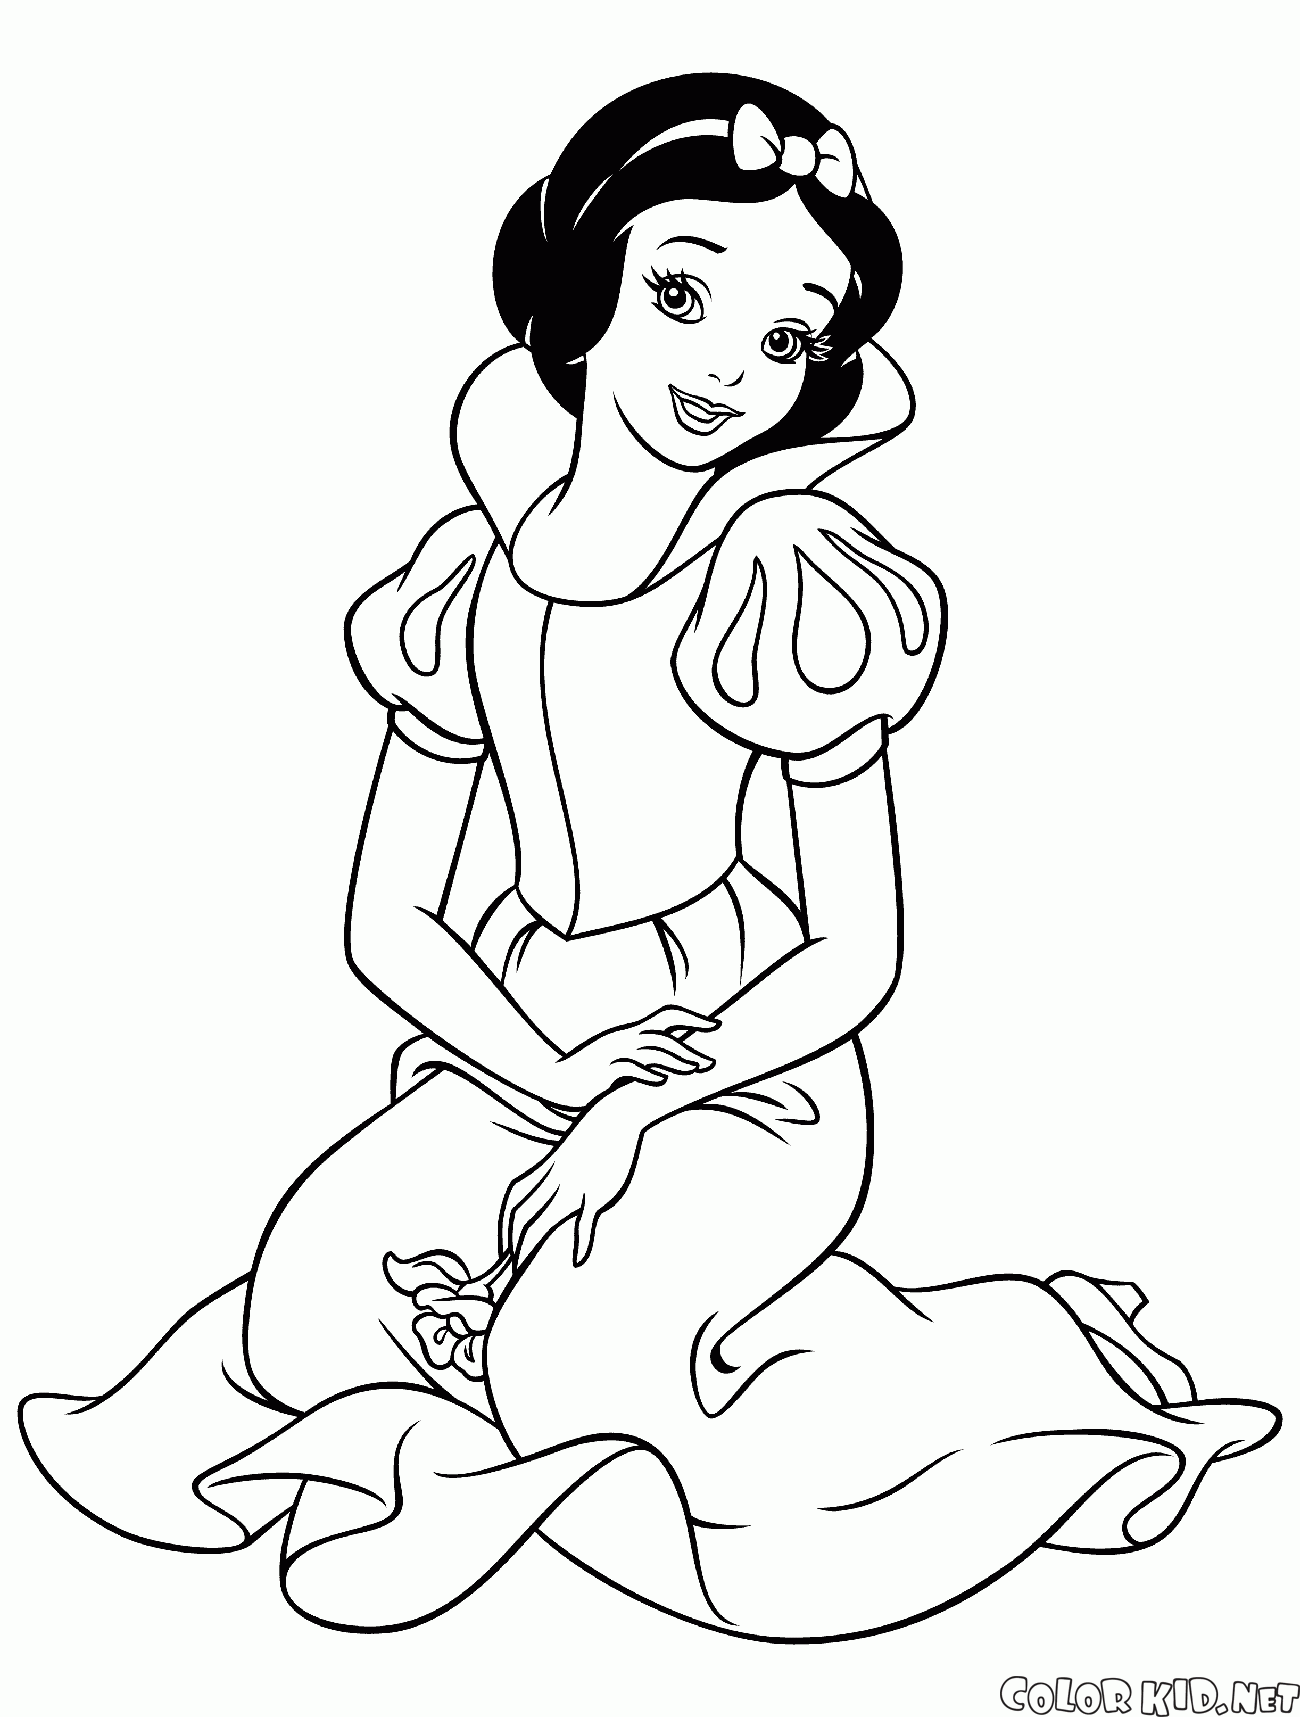 Coloring page   Disney princess Snow White